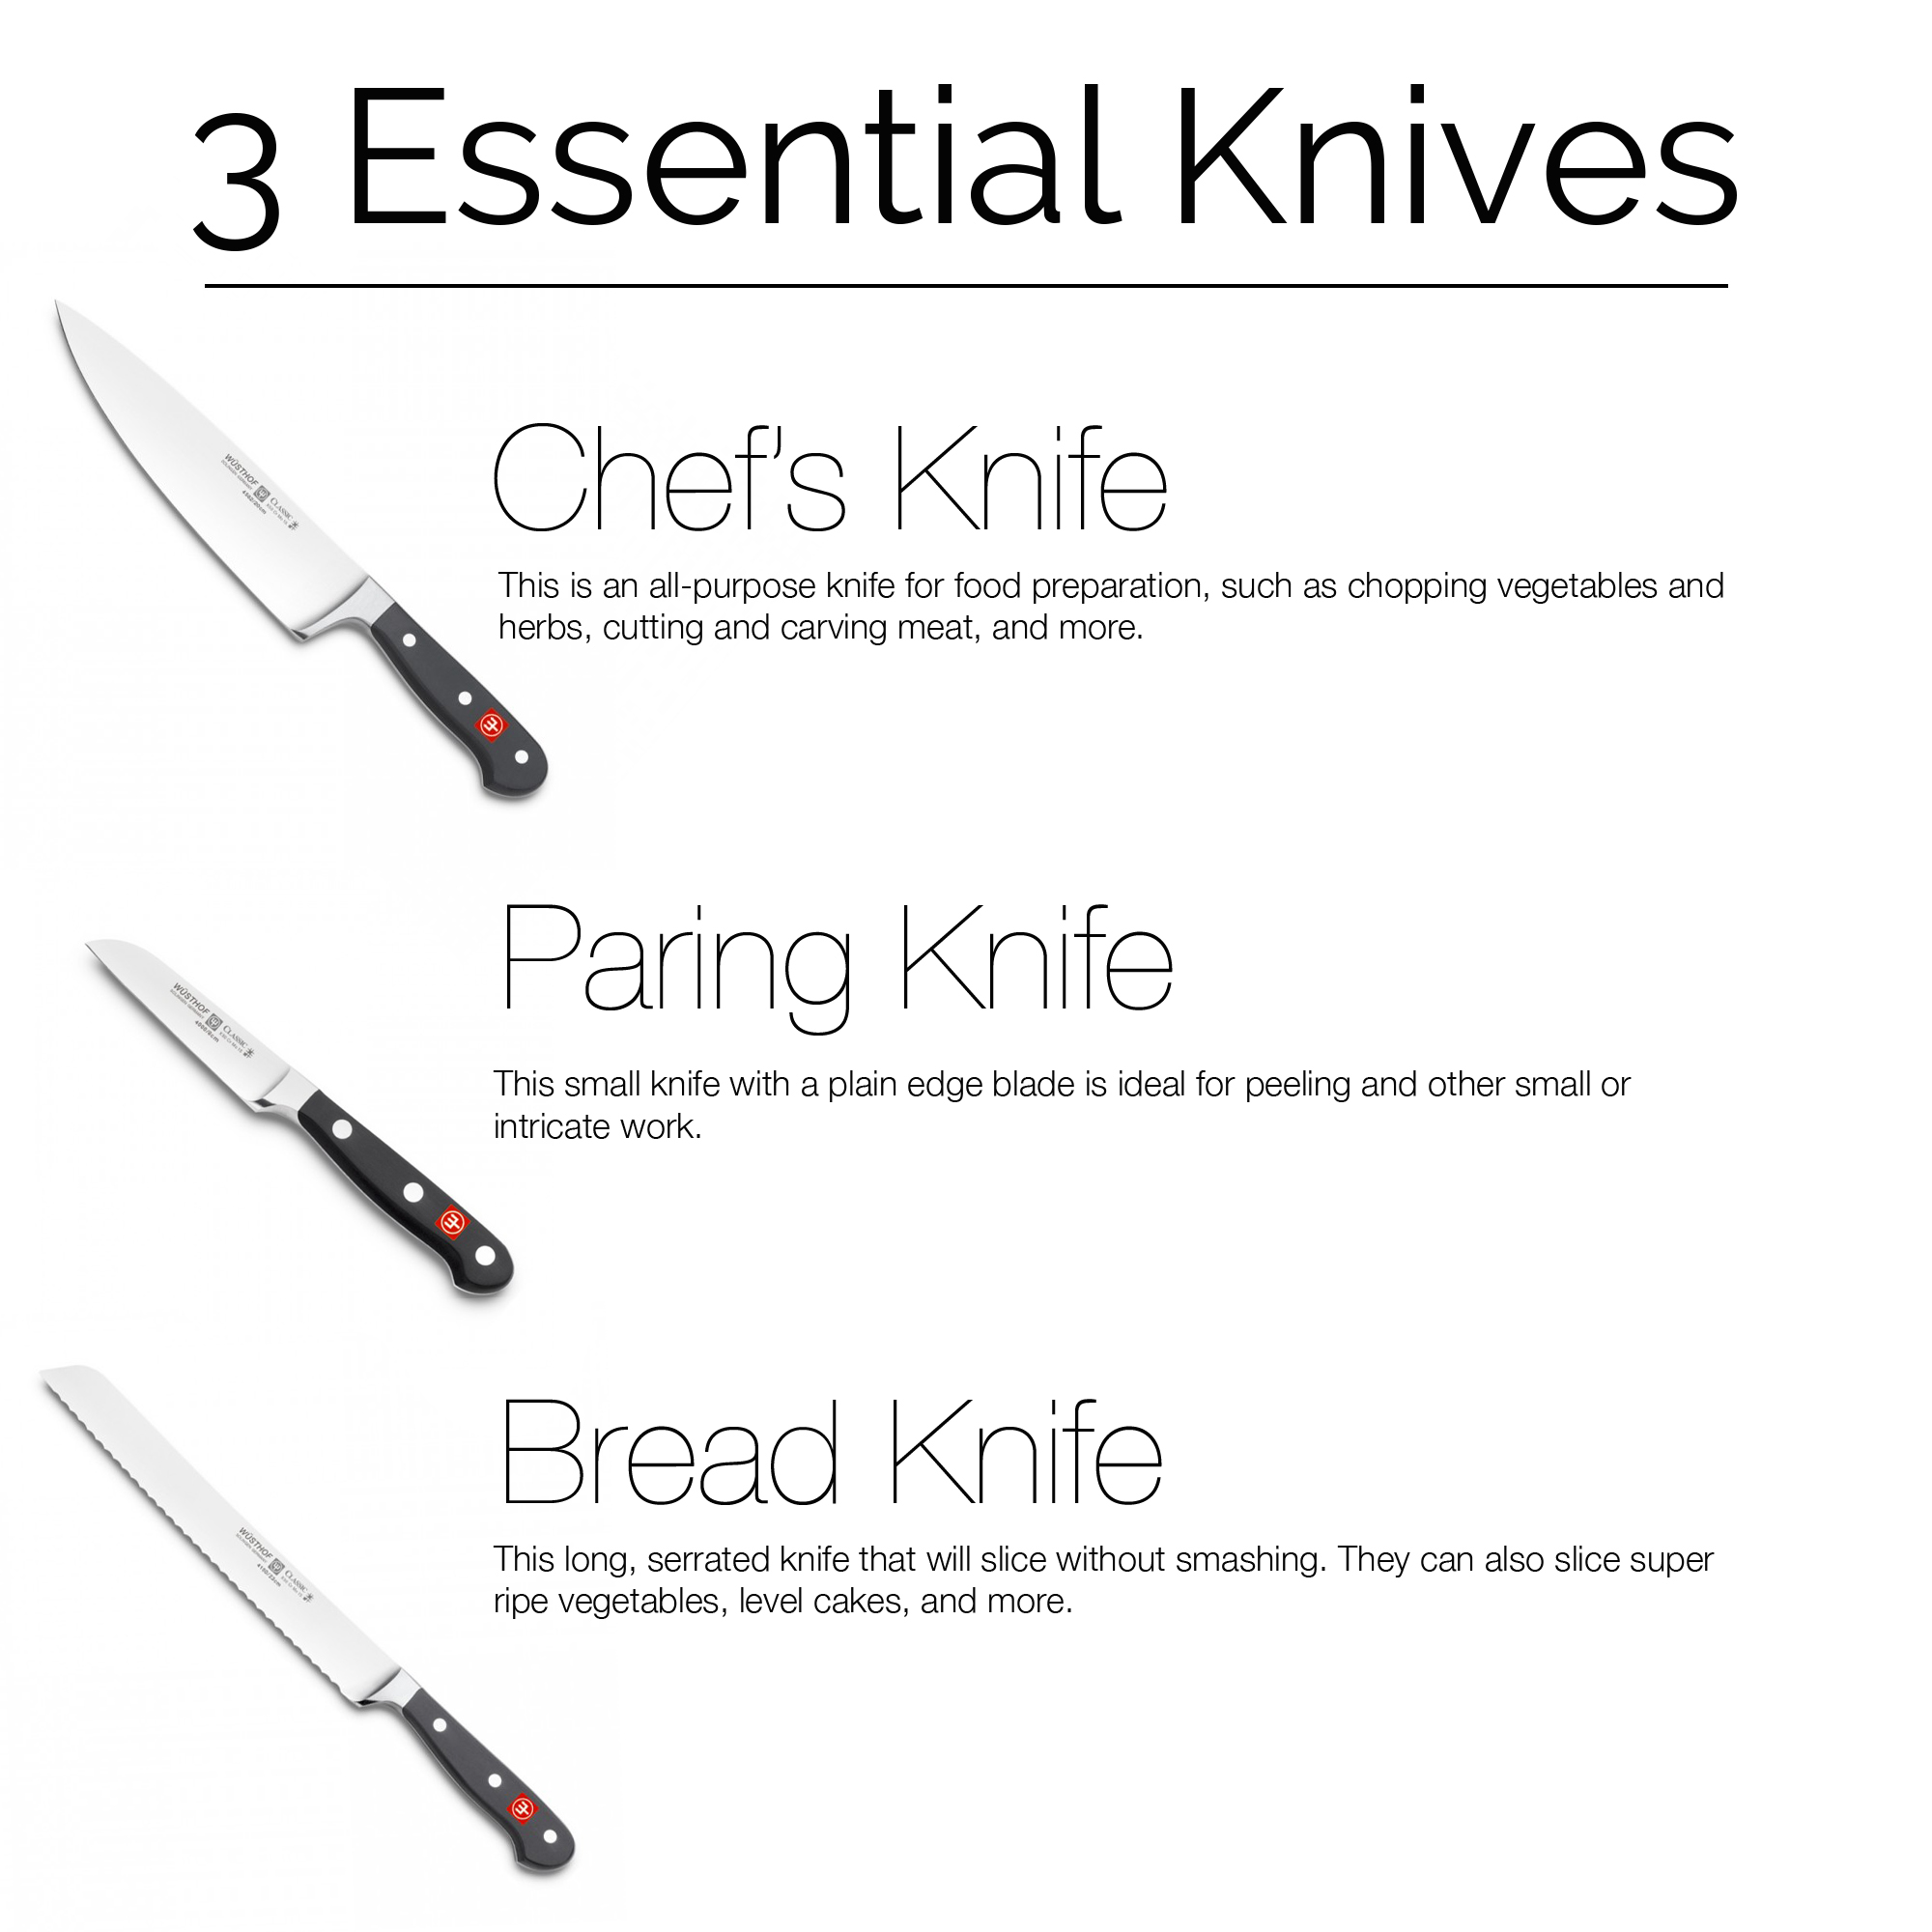 https://www.gygiblog.com/wp-content/uploads/2015/01/3-essential-knives-11.jpg